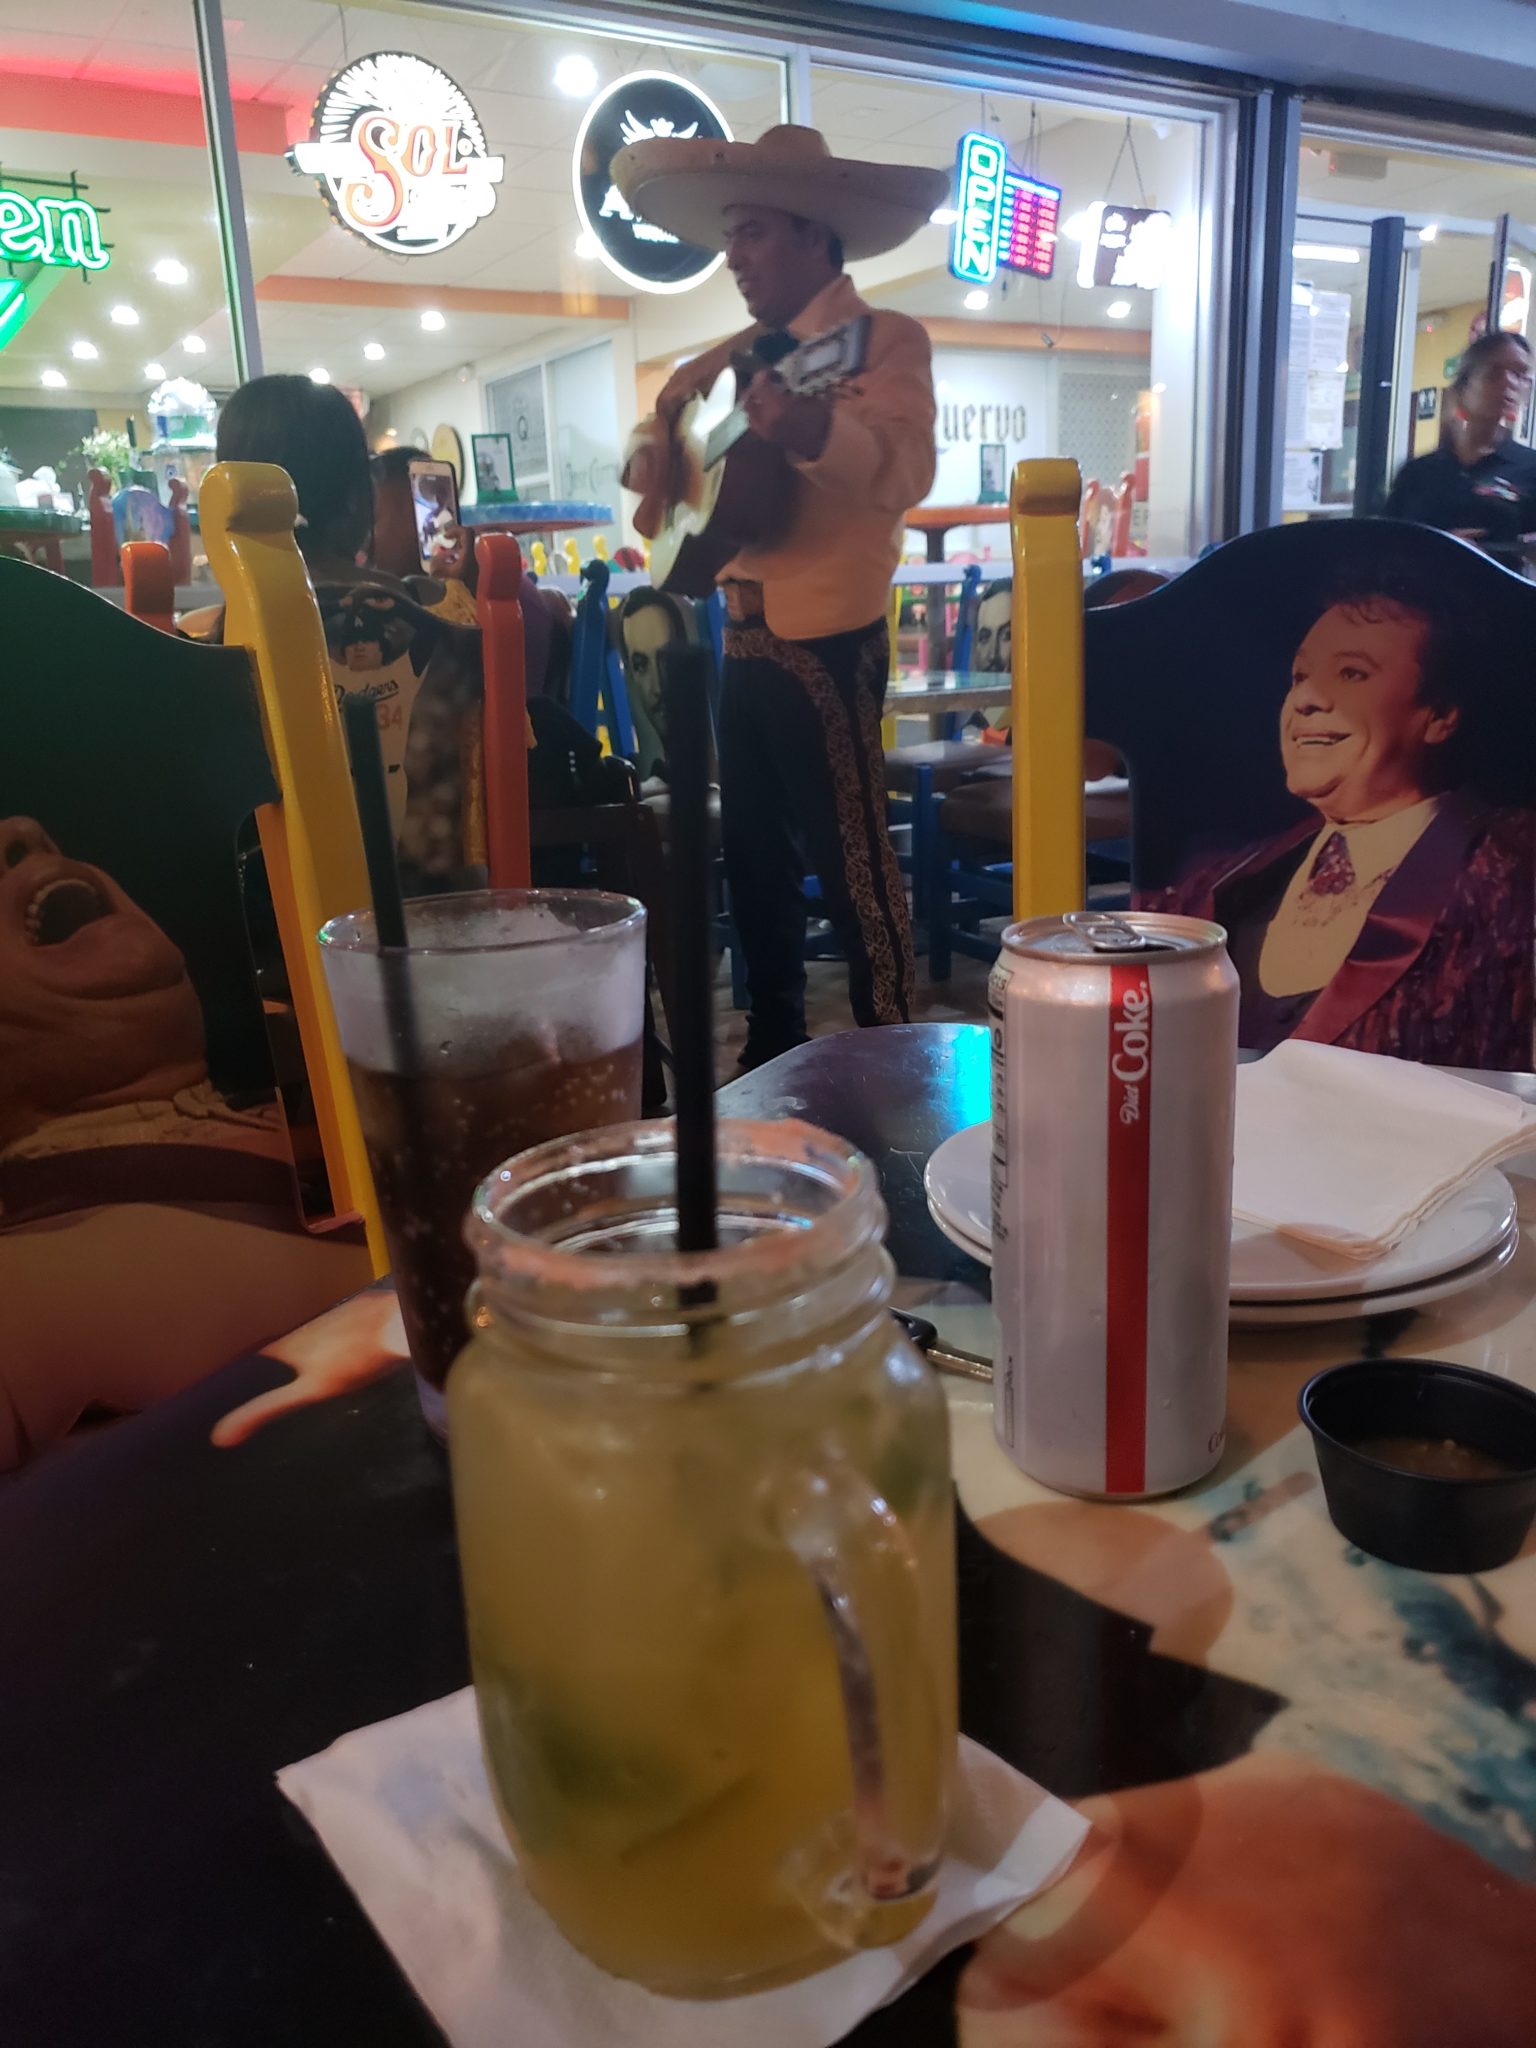 a man playing guitar at a restaurant